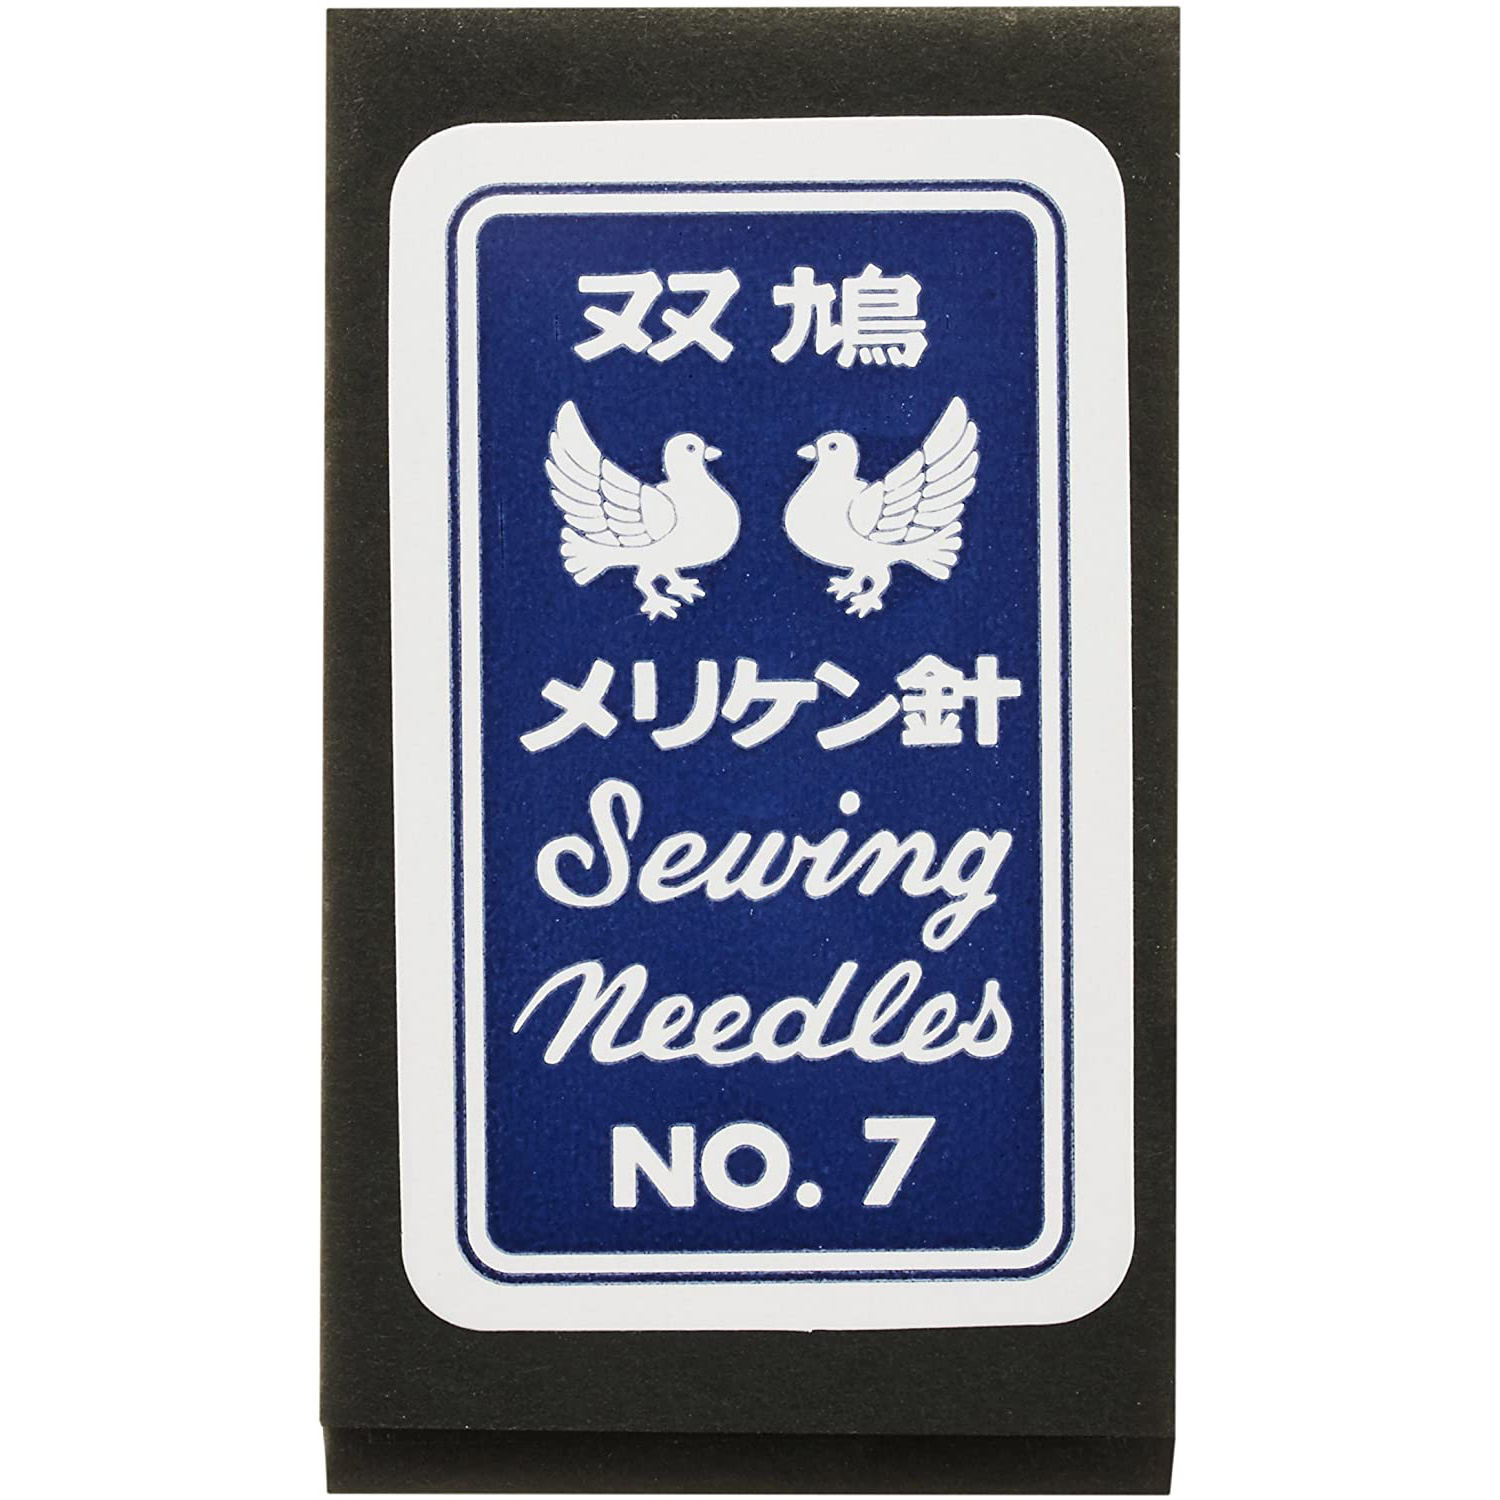 Soukyu Sewing Needles #7 (pcs)